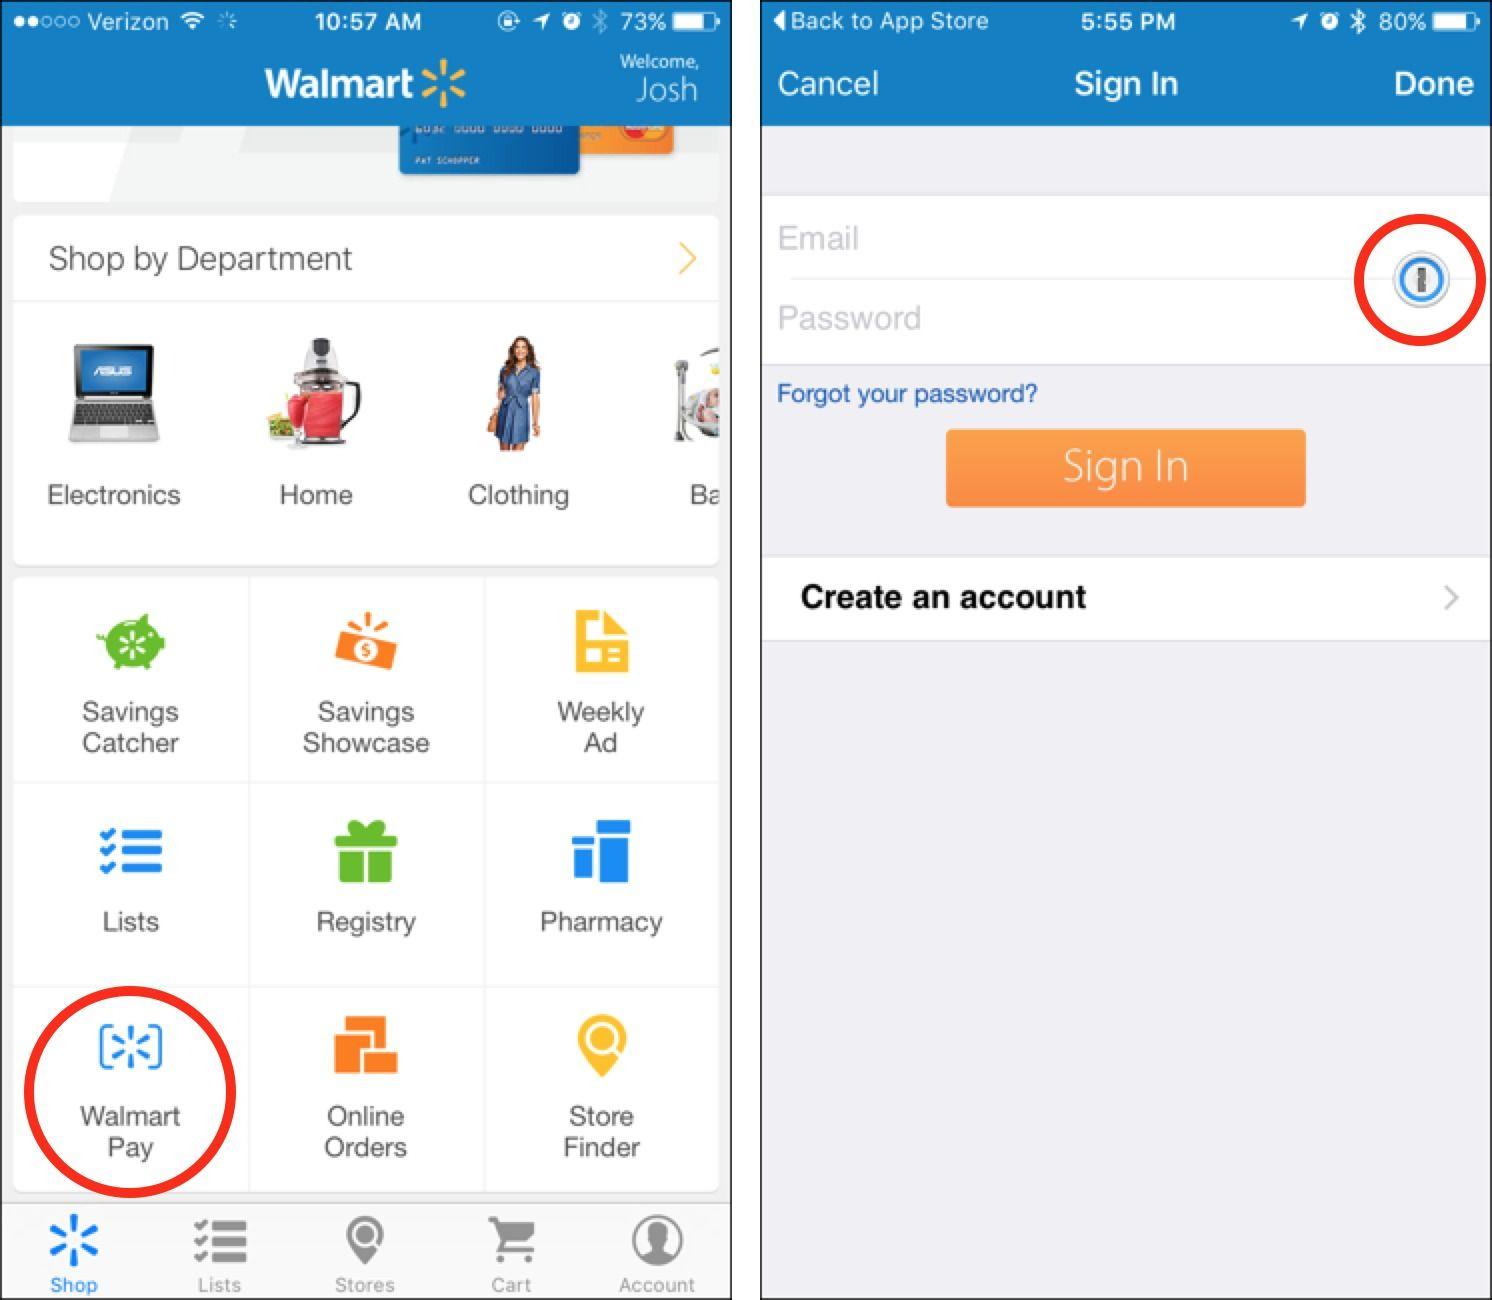 Walmart.com App Logo - Walmart Pay Is Better Than You Might Expect - TidBITS